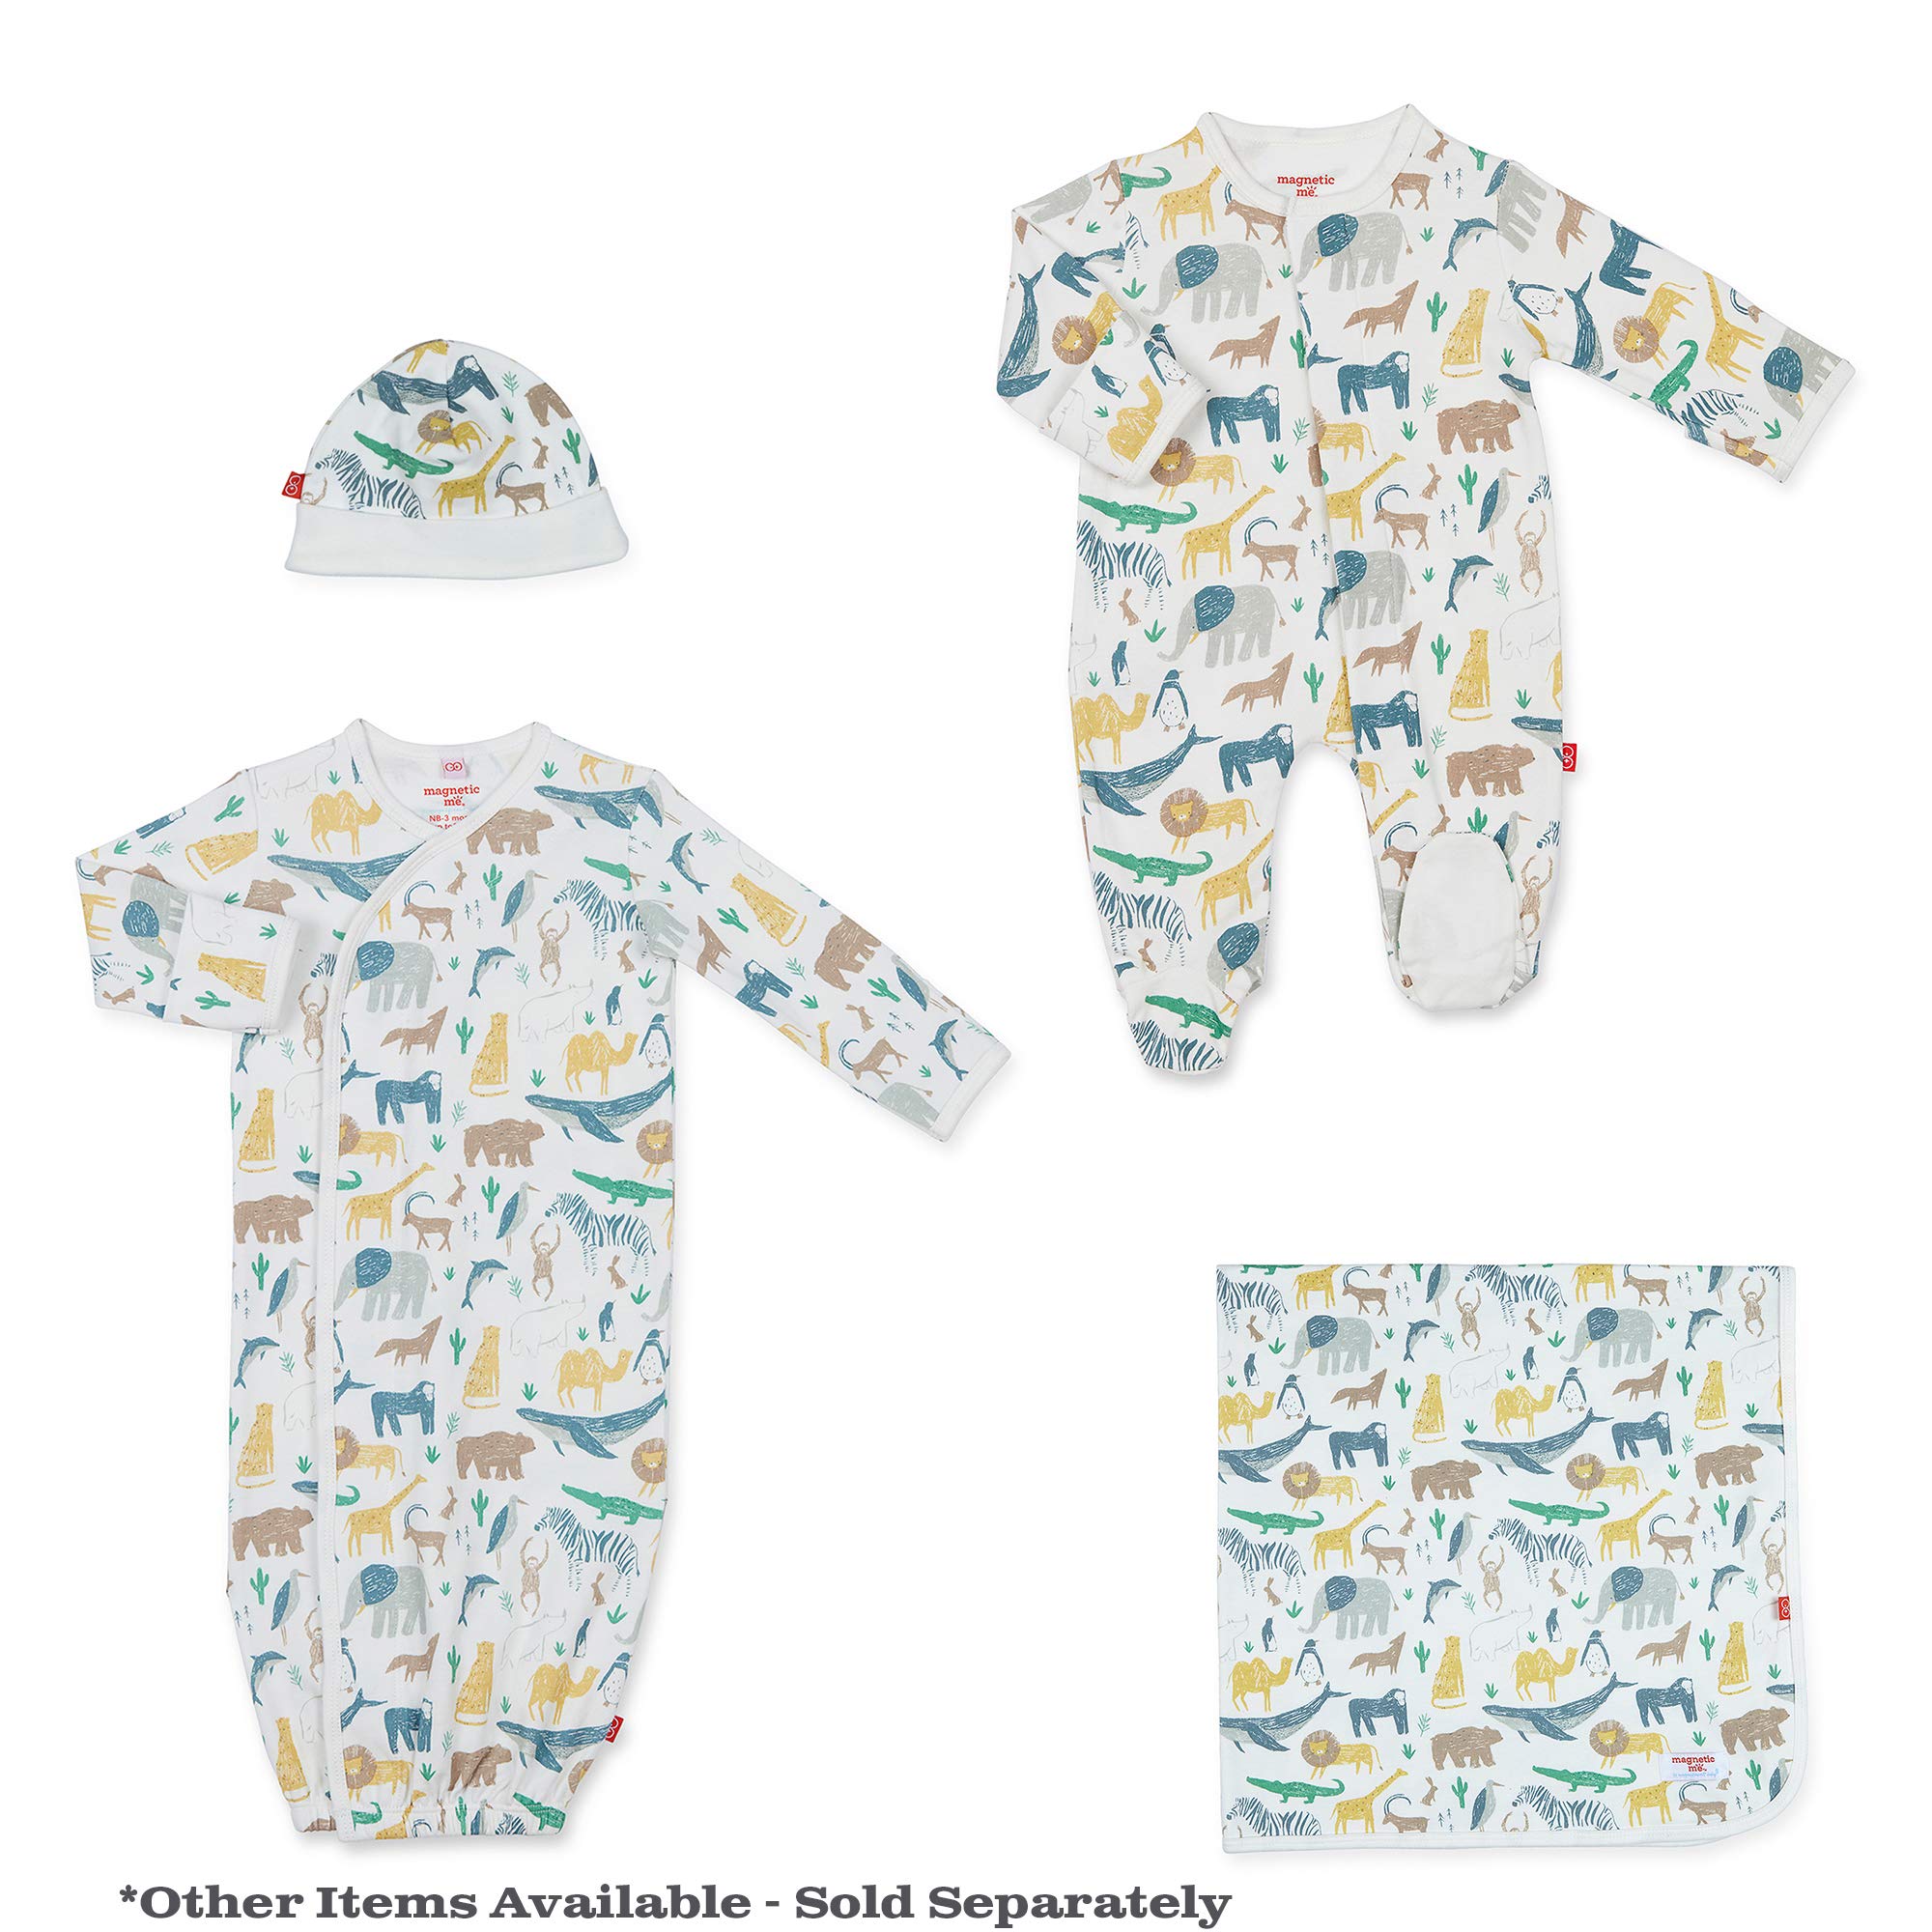 Magnetic Me Footie Pajamas 100% Organic Cotton Baby Sleepwear Quick Magnetic Fastener Sleeper